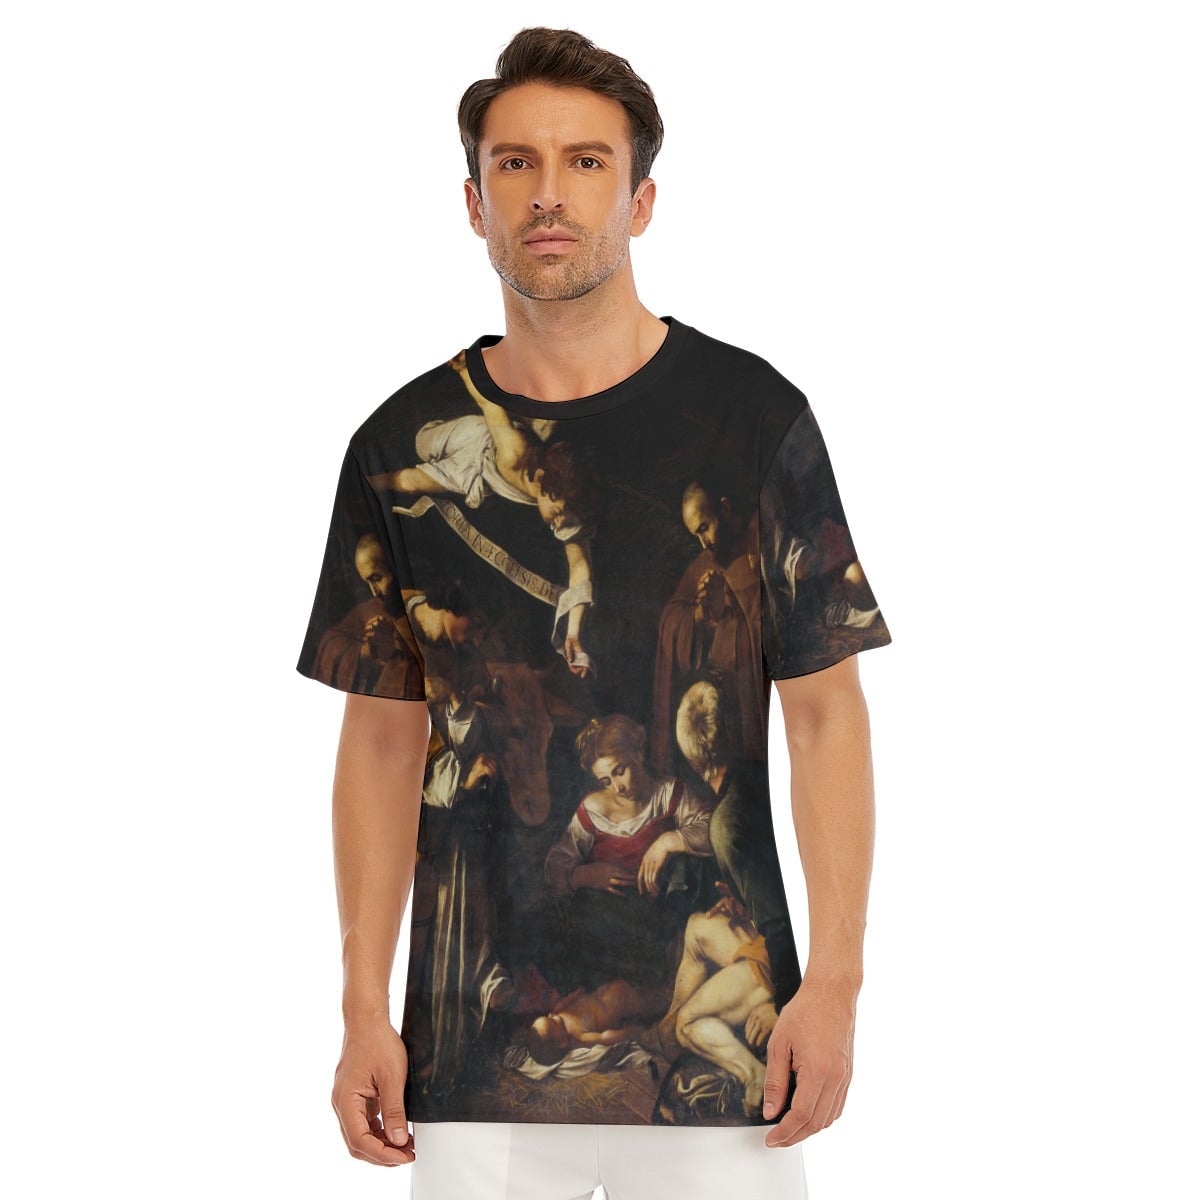 Nativity by Caravaggio Art T-Shirt